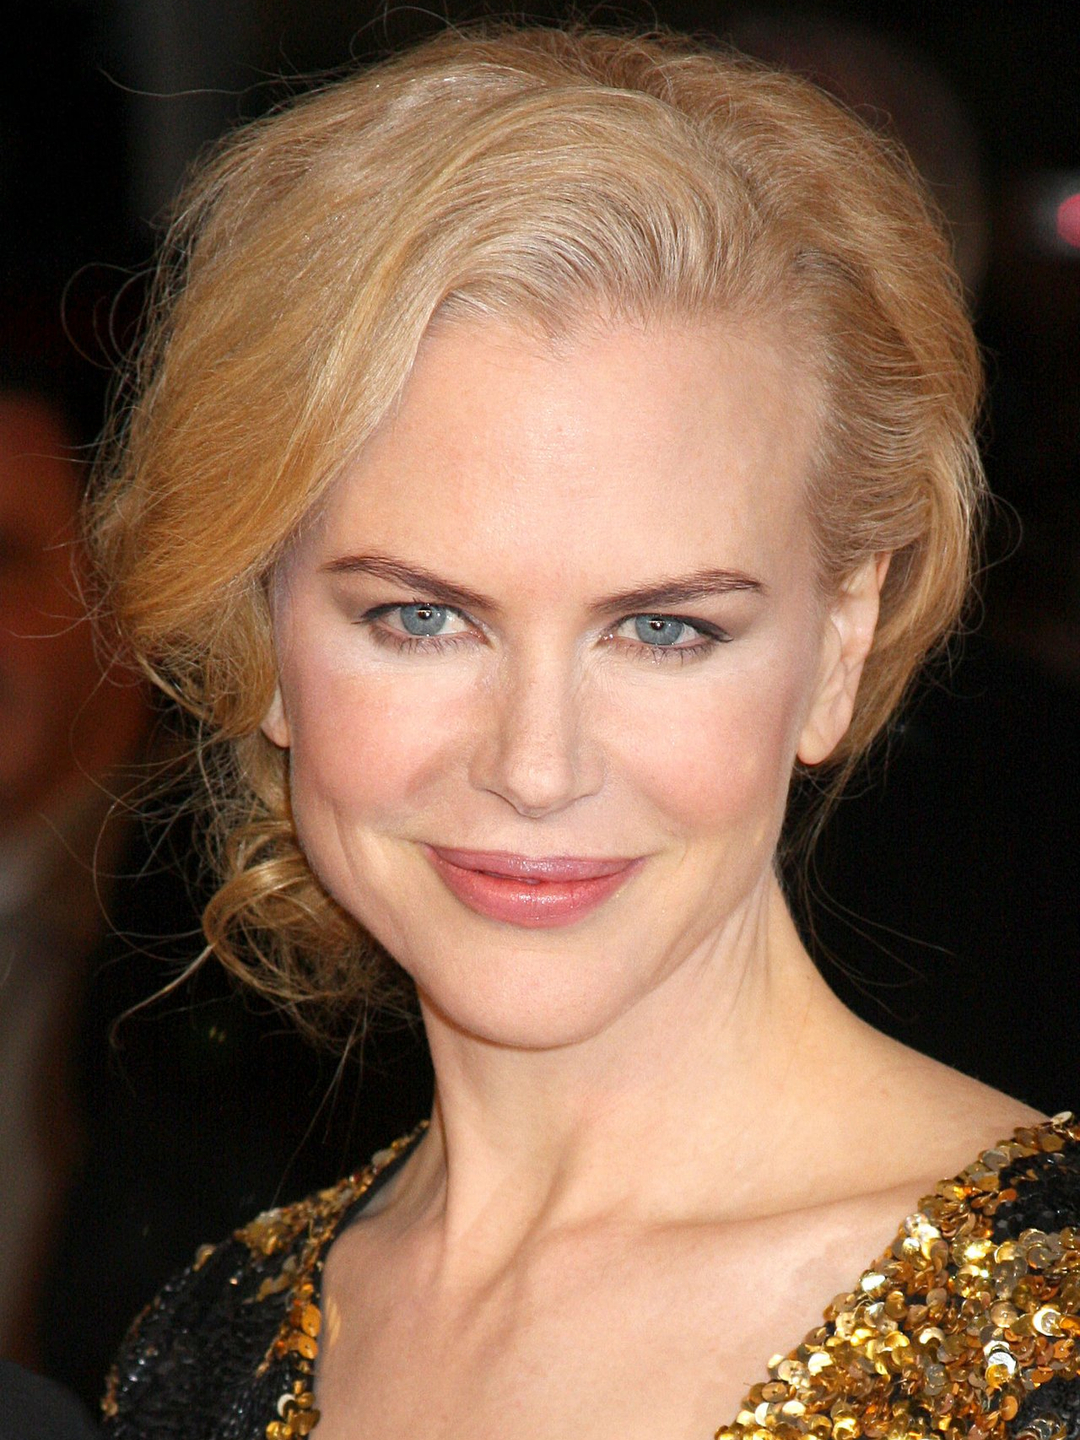 Nicole Kidman life story